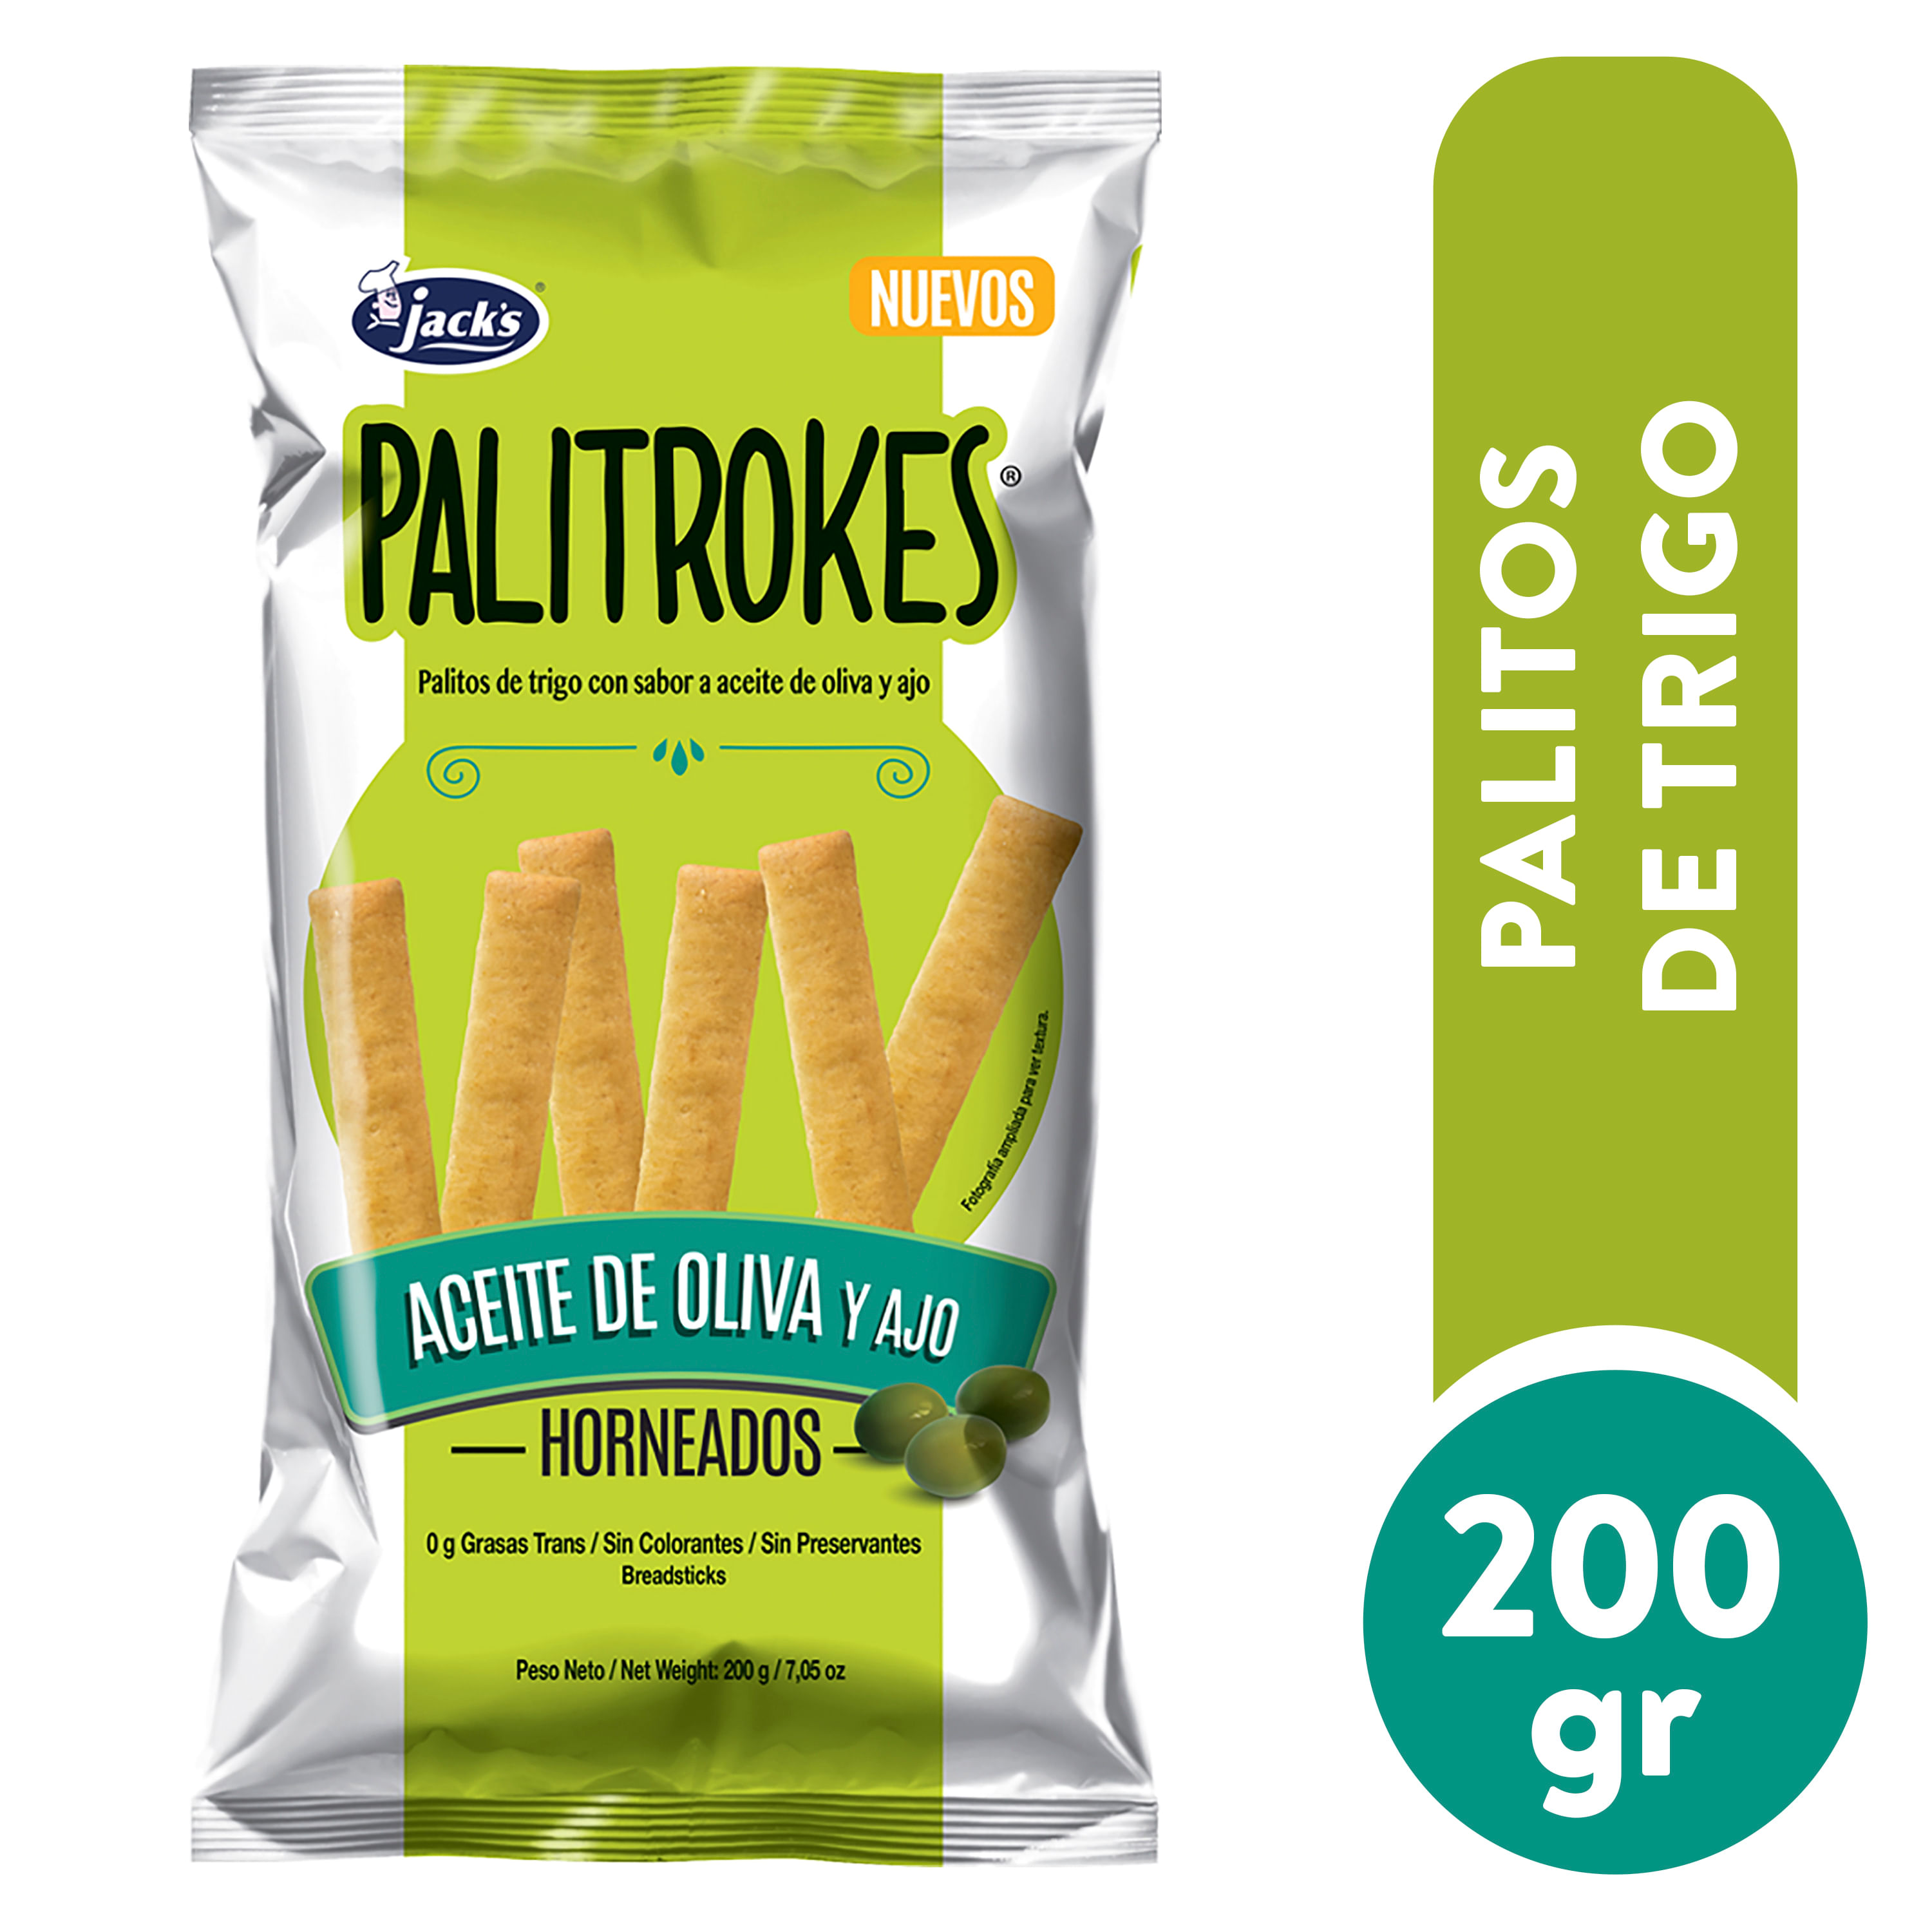 Snack-Palitrokes-Horneado-Ace-Oliv-200-gr-1-63272